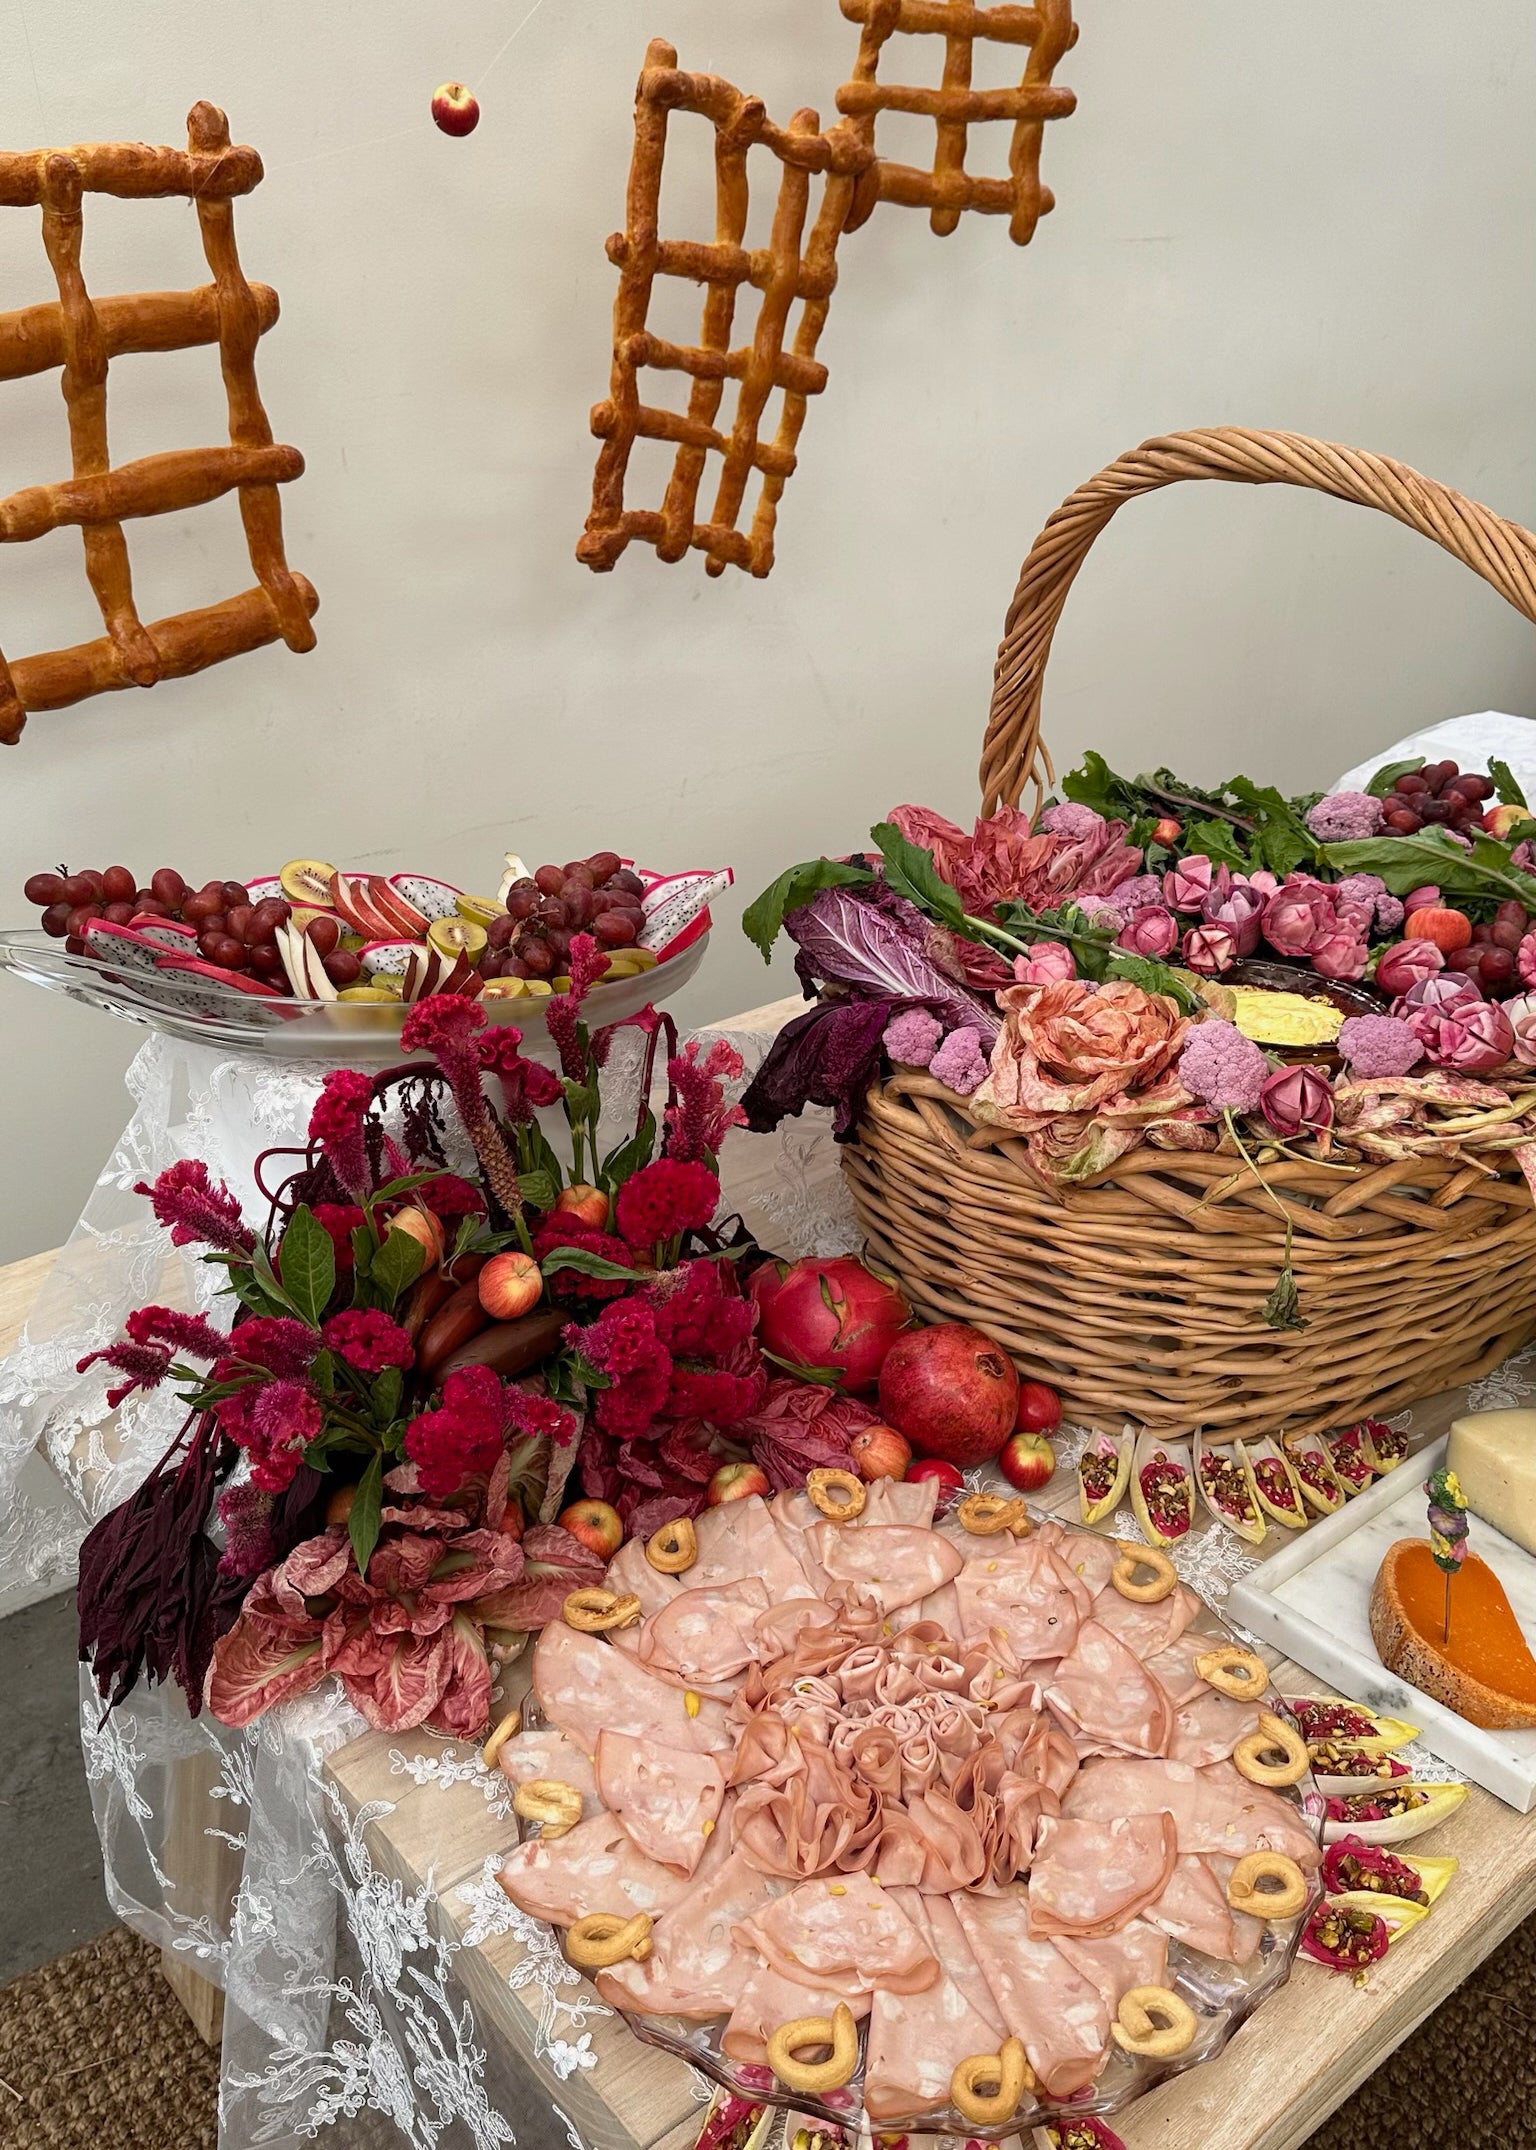 Emi Jay x Frankies Bikinis Event food trays and basket of flowers on table